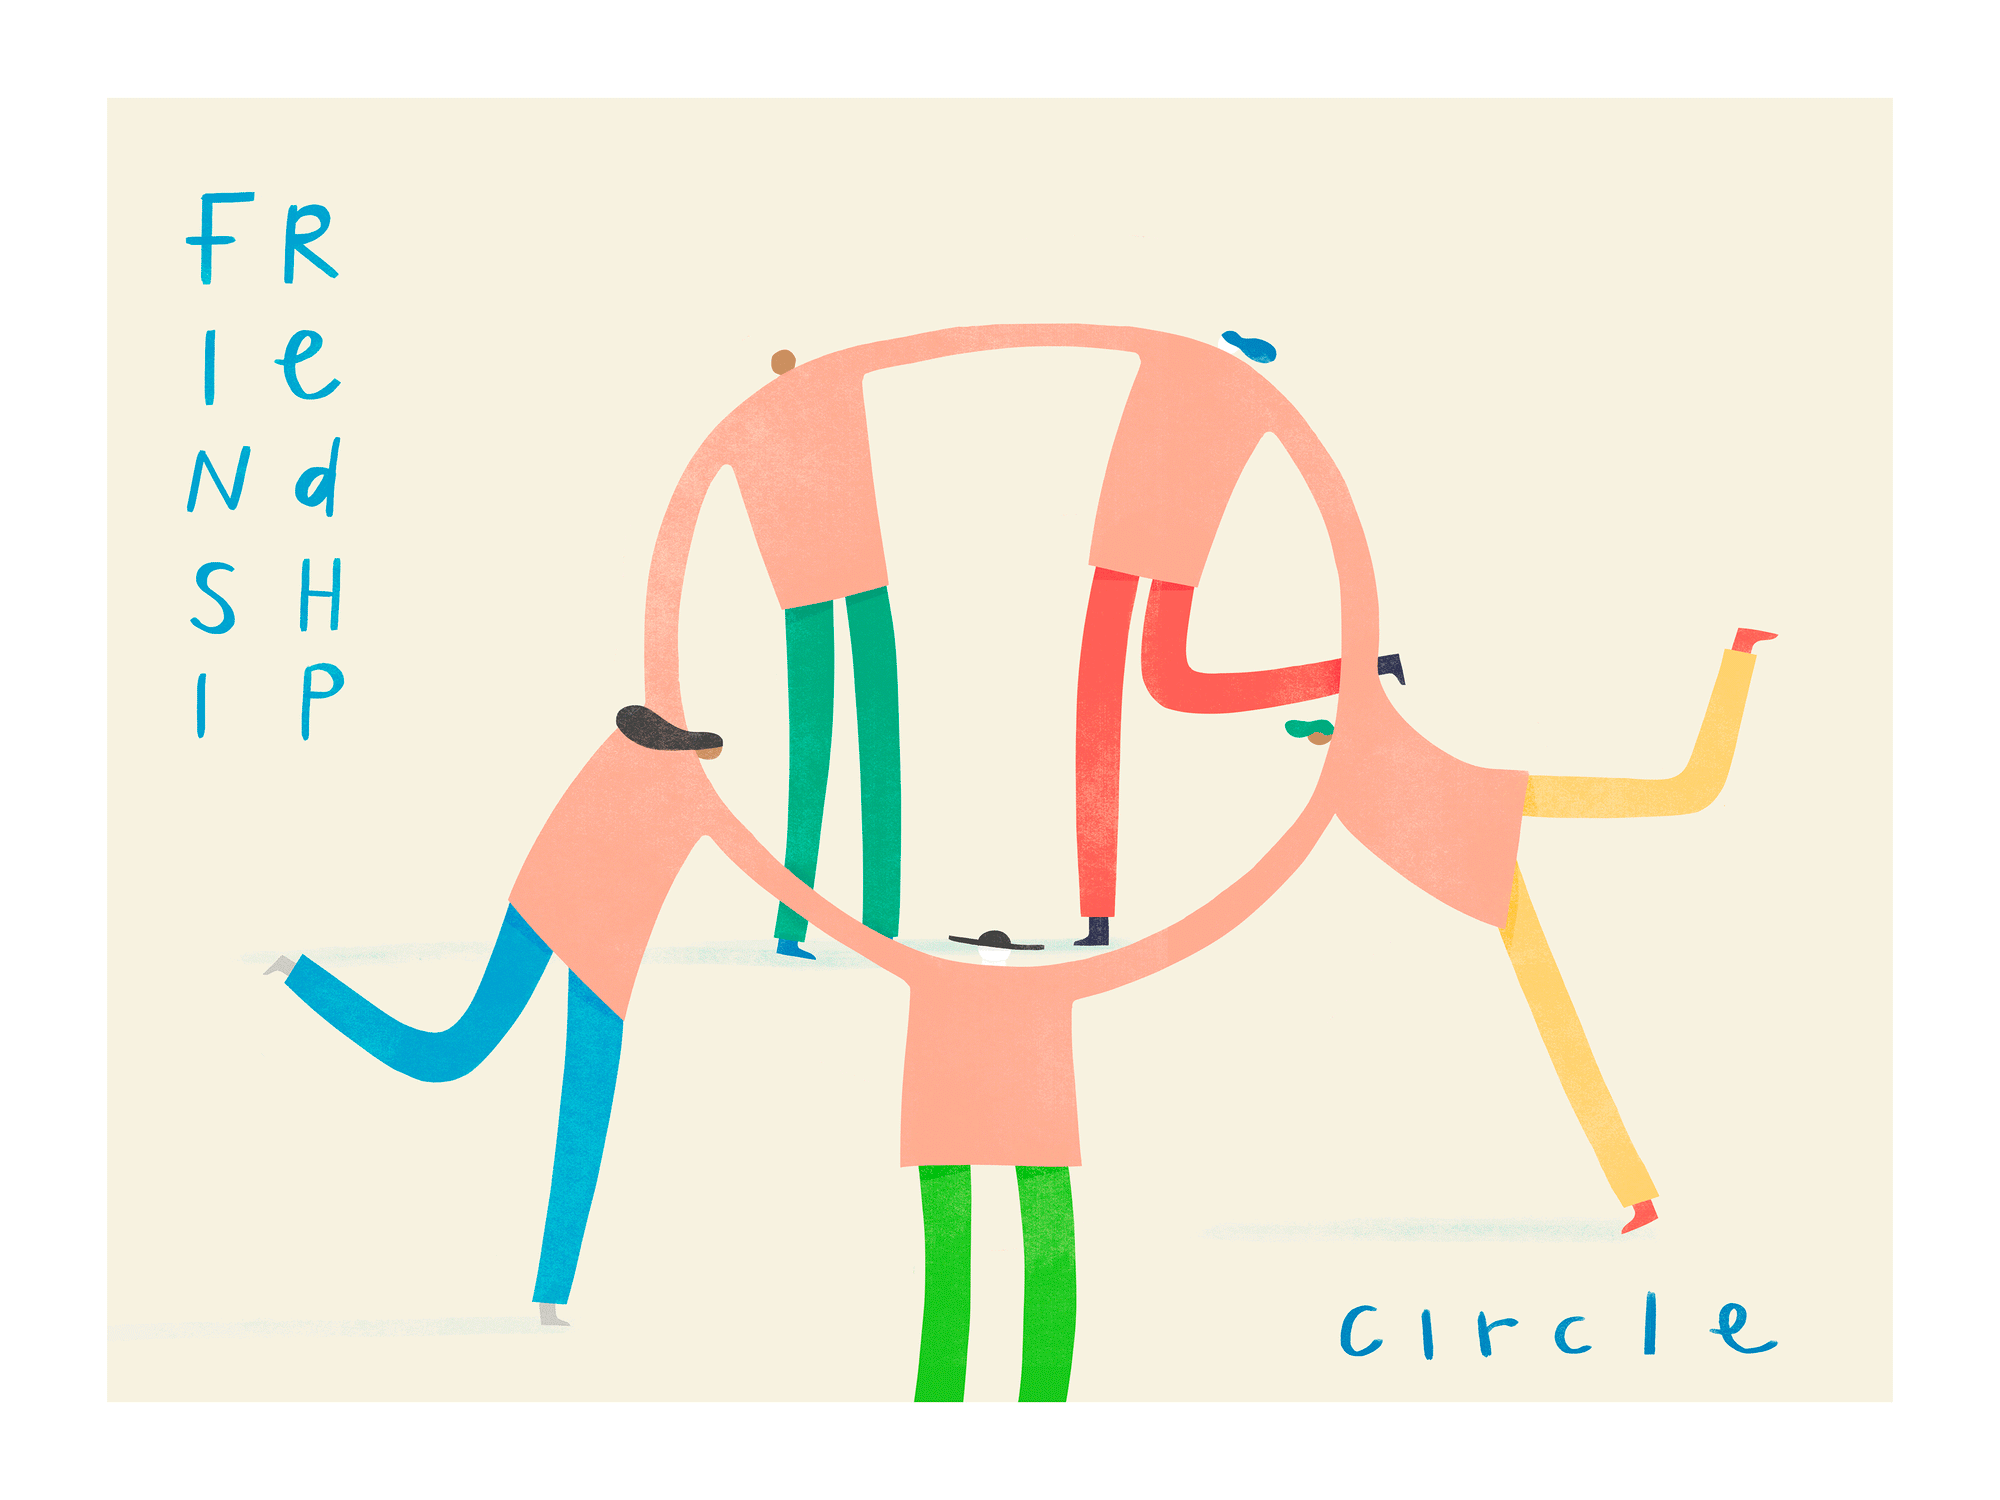 Friendship circle by Mark Conlan